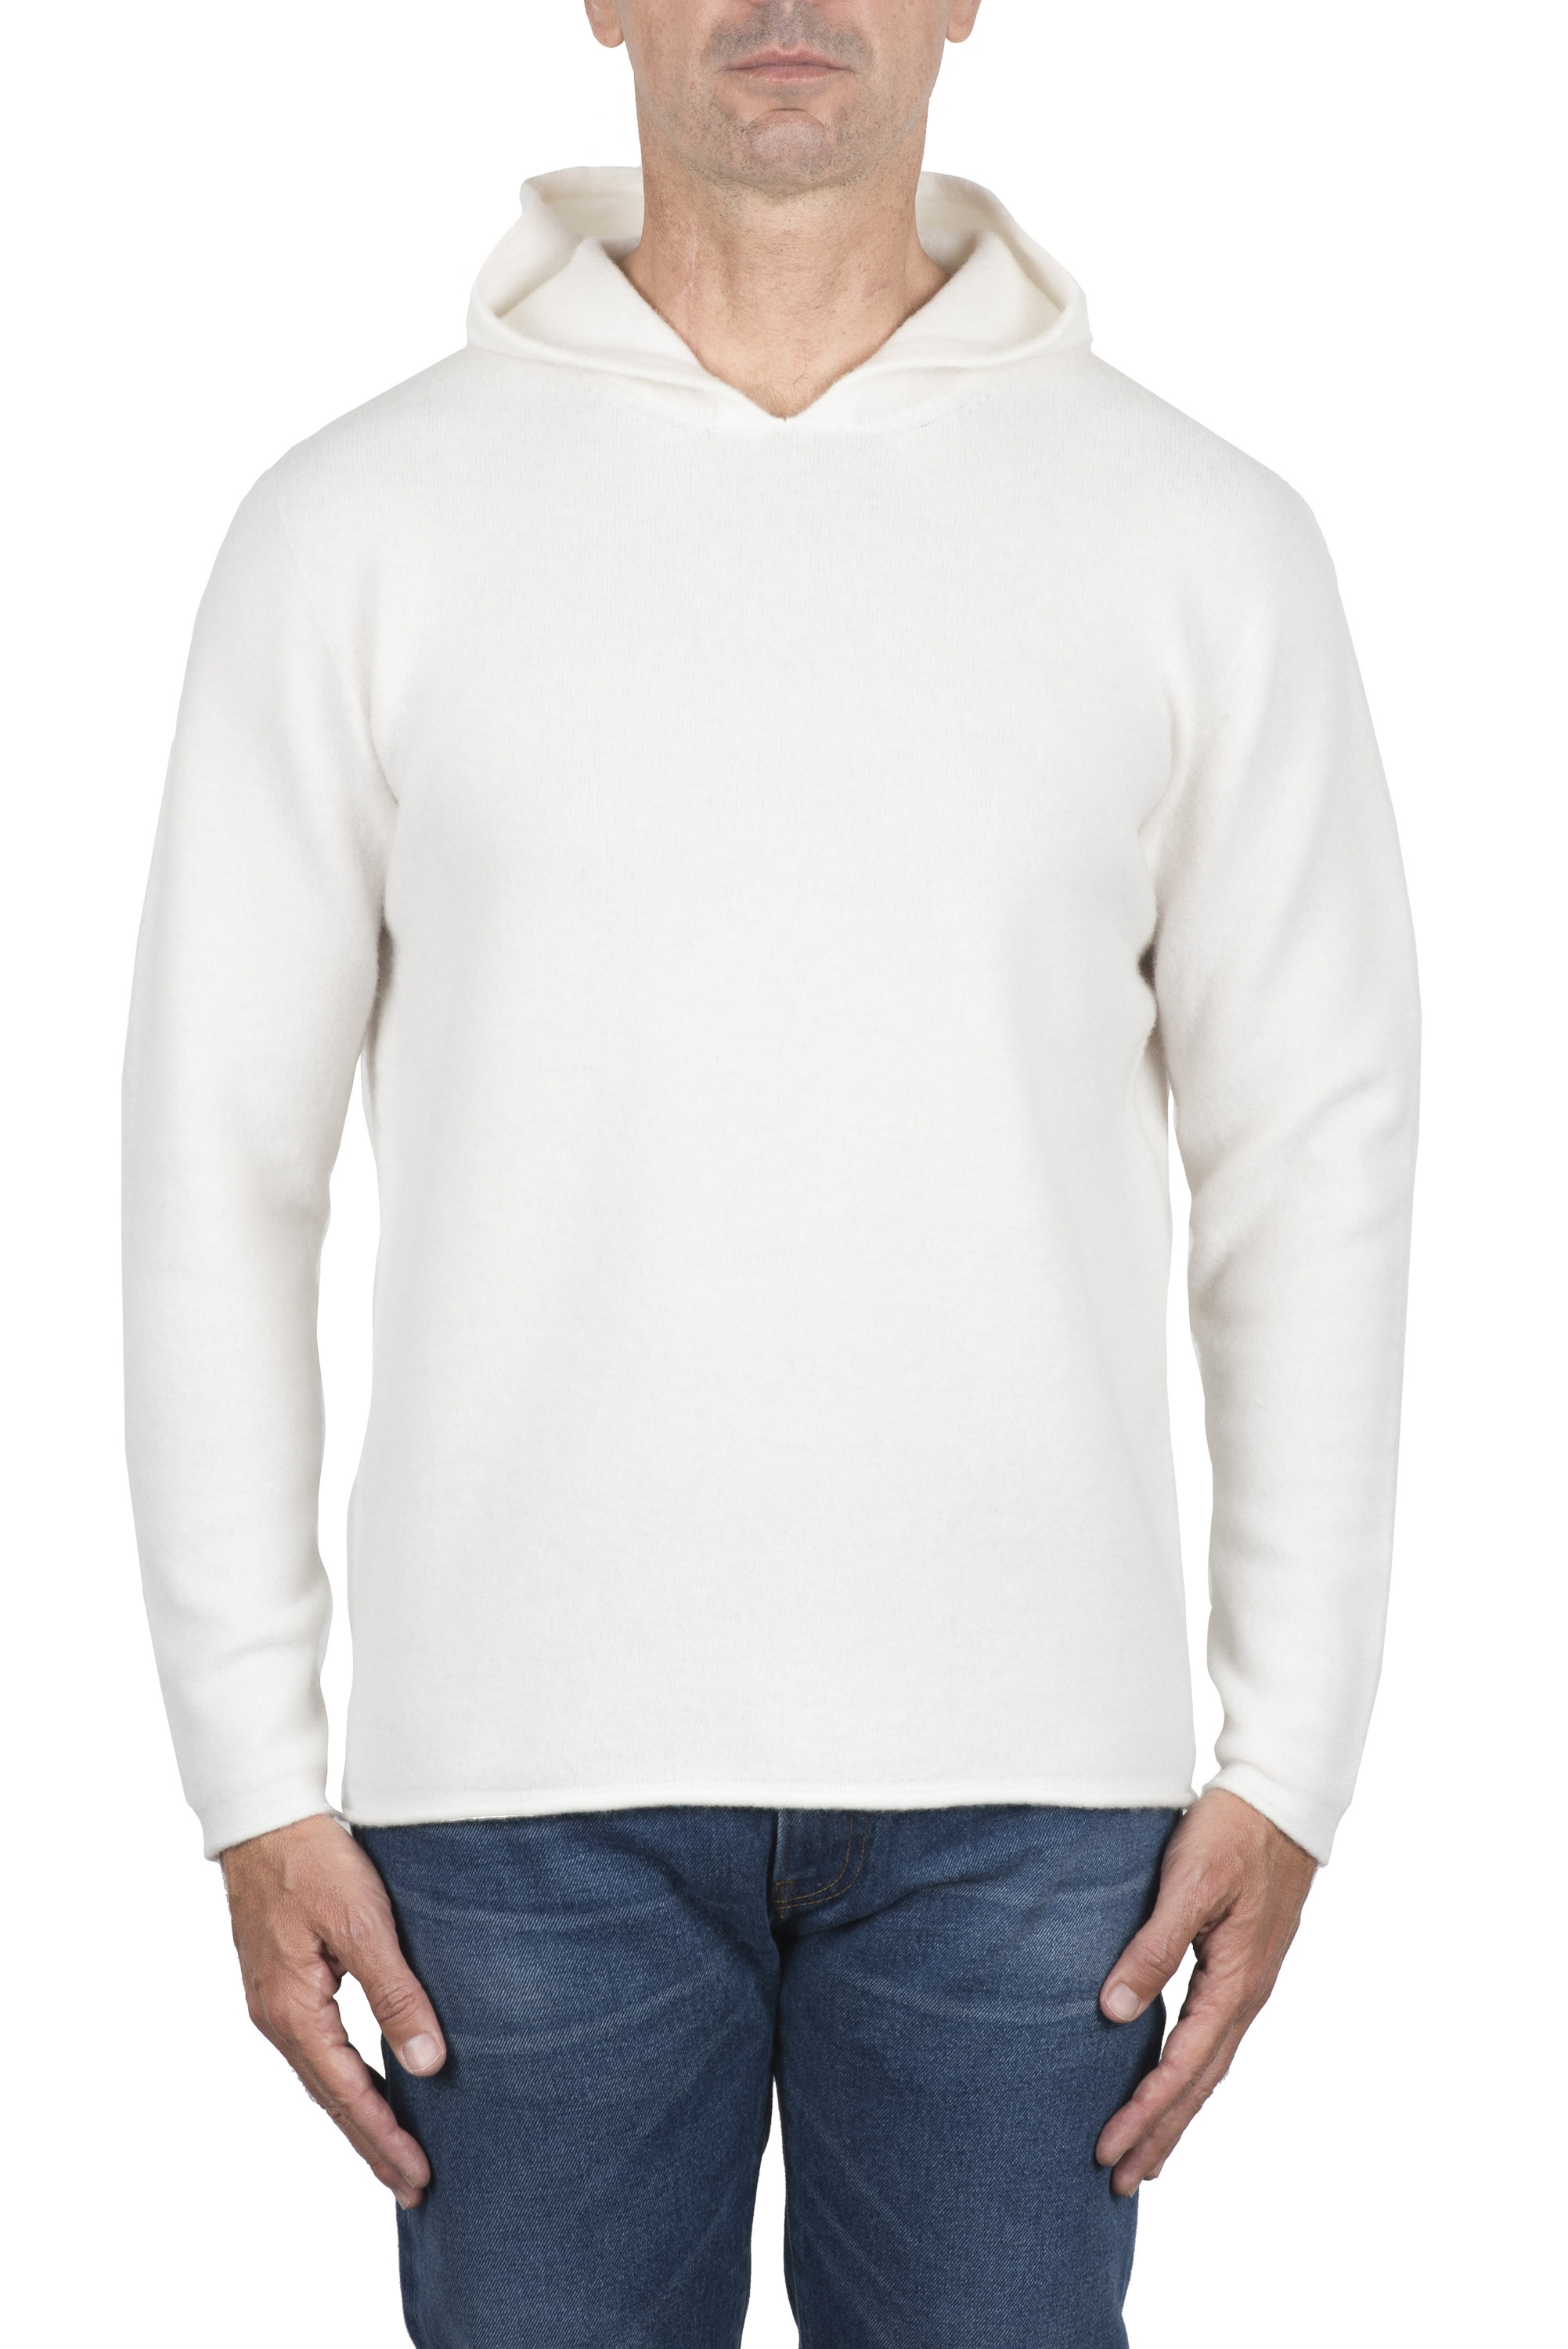 SBU 04707_23AW White merino wool blend hooded sweater 01